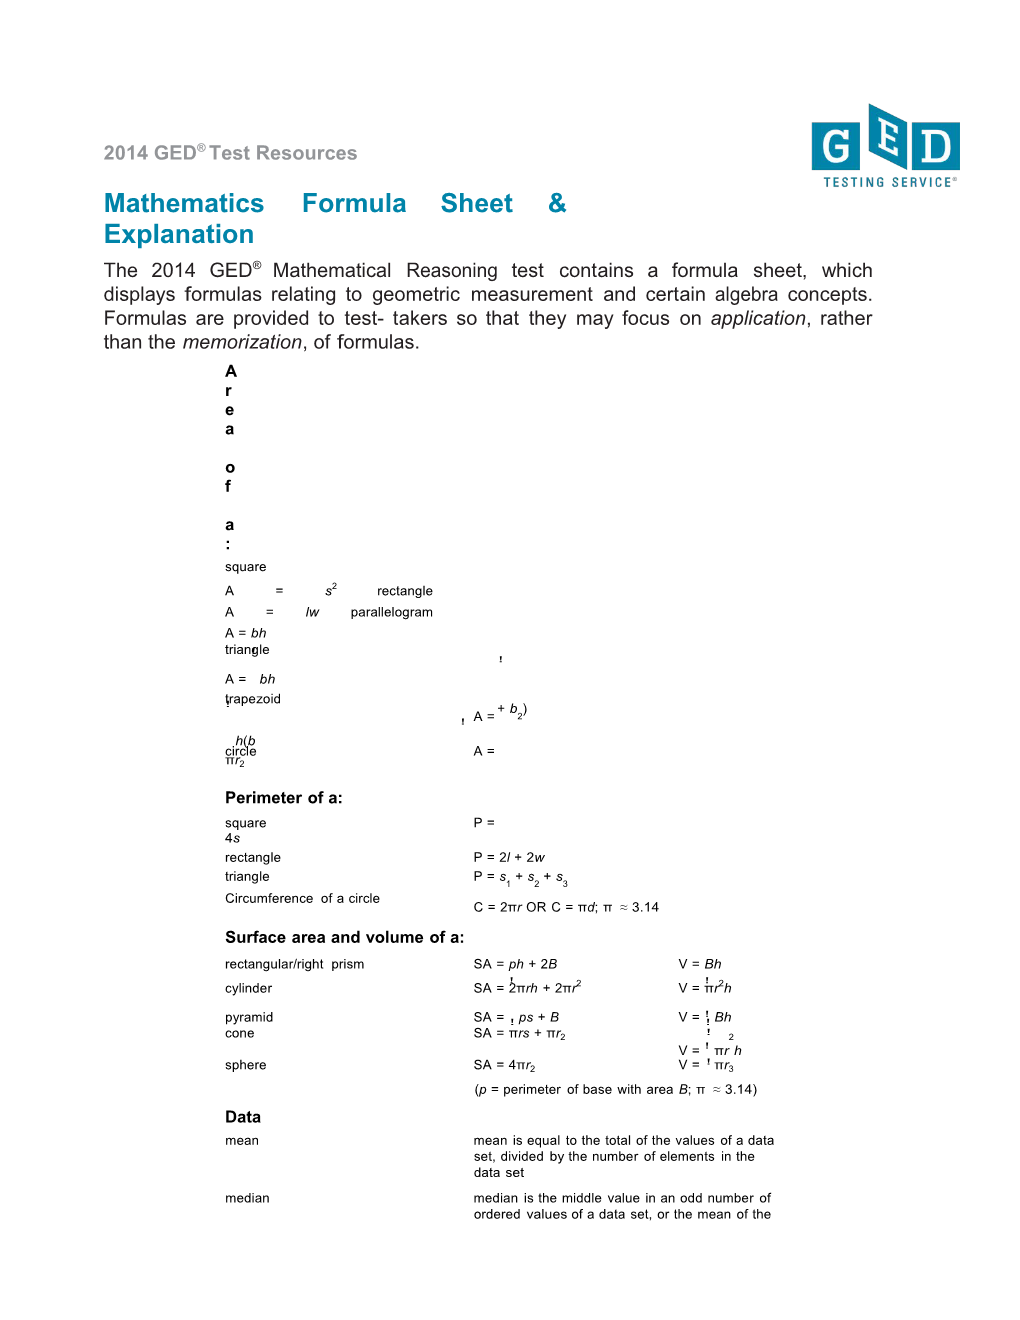 The2014 GED Mathematicalreasoningtestcontainsaformulasheet,Whichdisplaysformulas